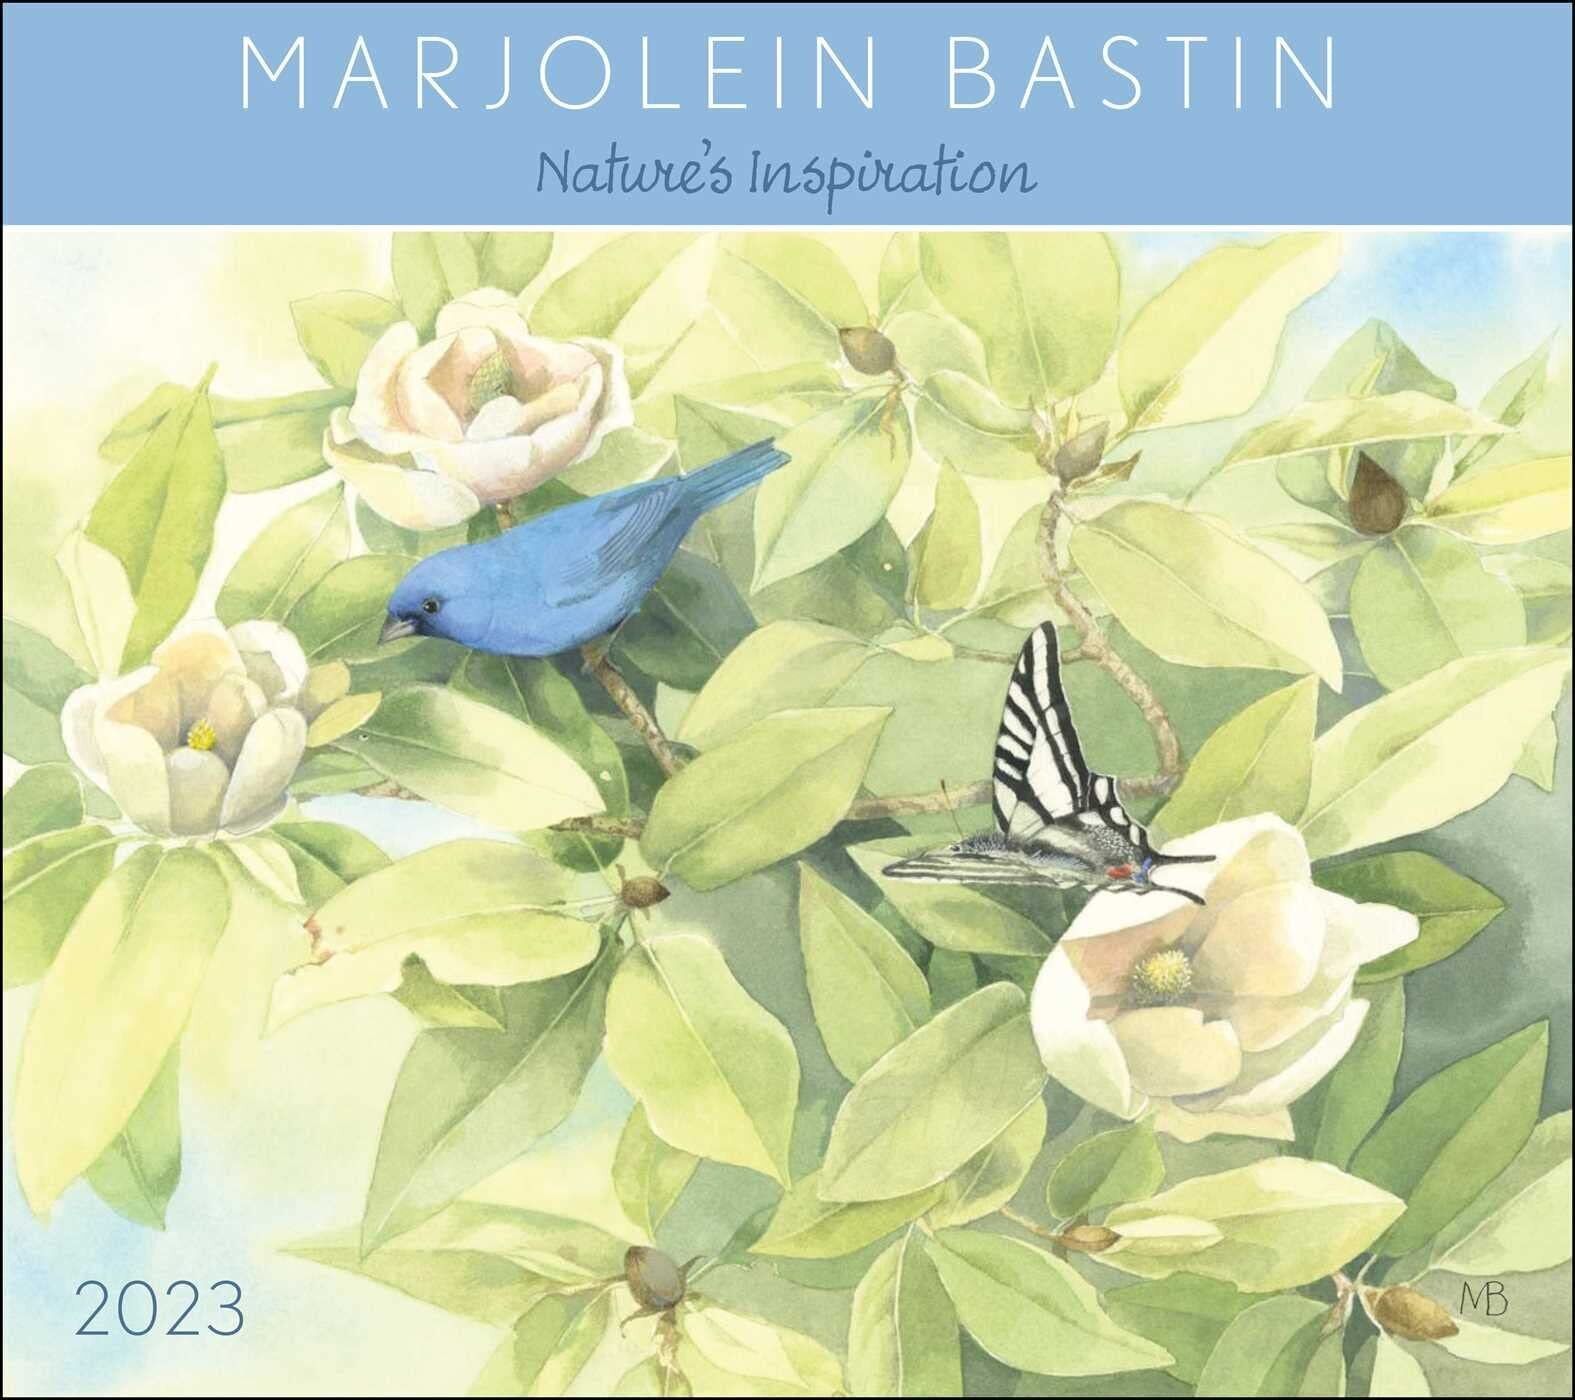 Bastin Marjolein Marjolein Bastin Nature's Inspiration 2023 Deluxe Wall Calendar with Print 